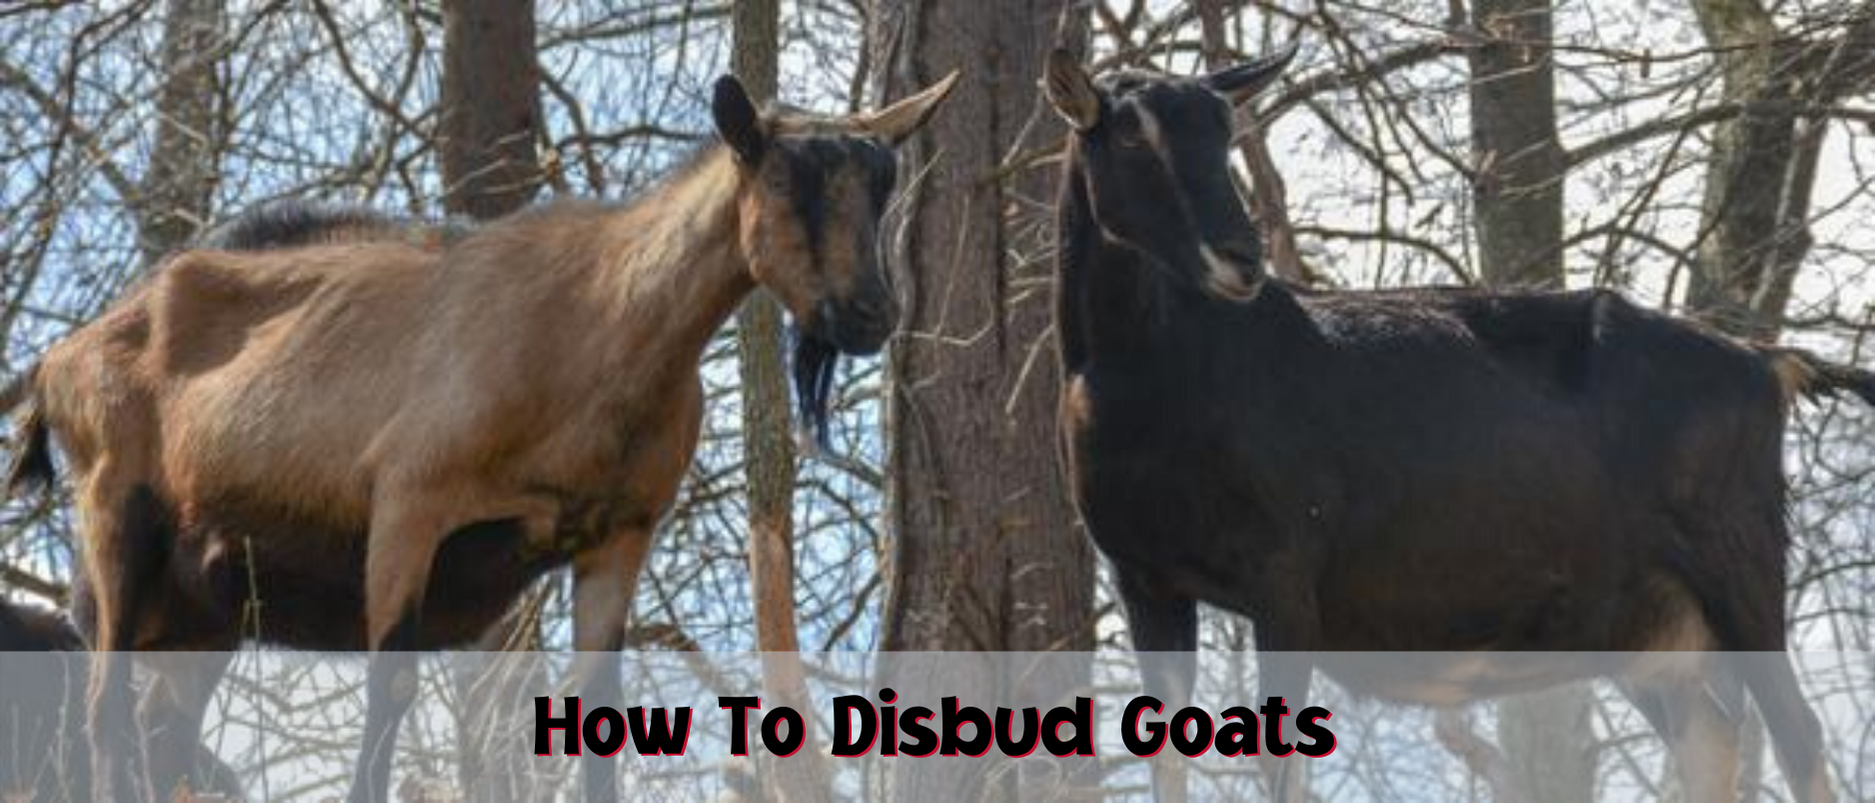 How to disbud goats